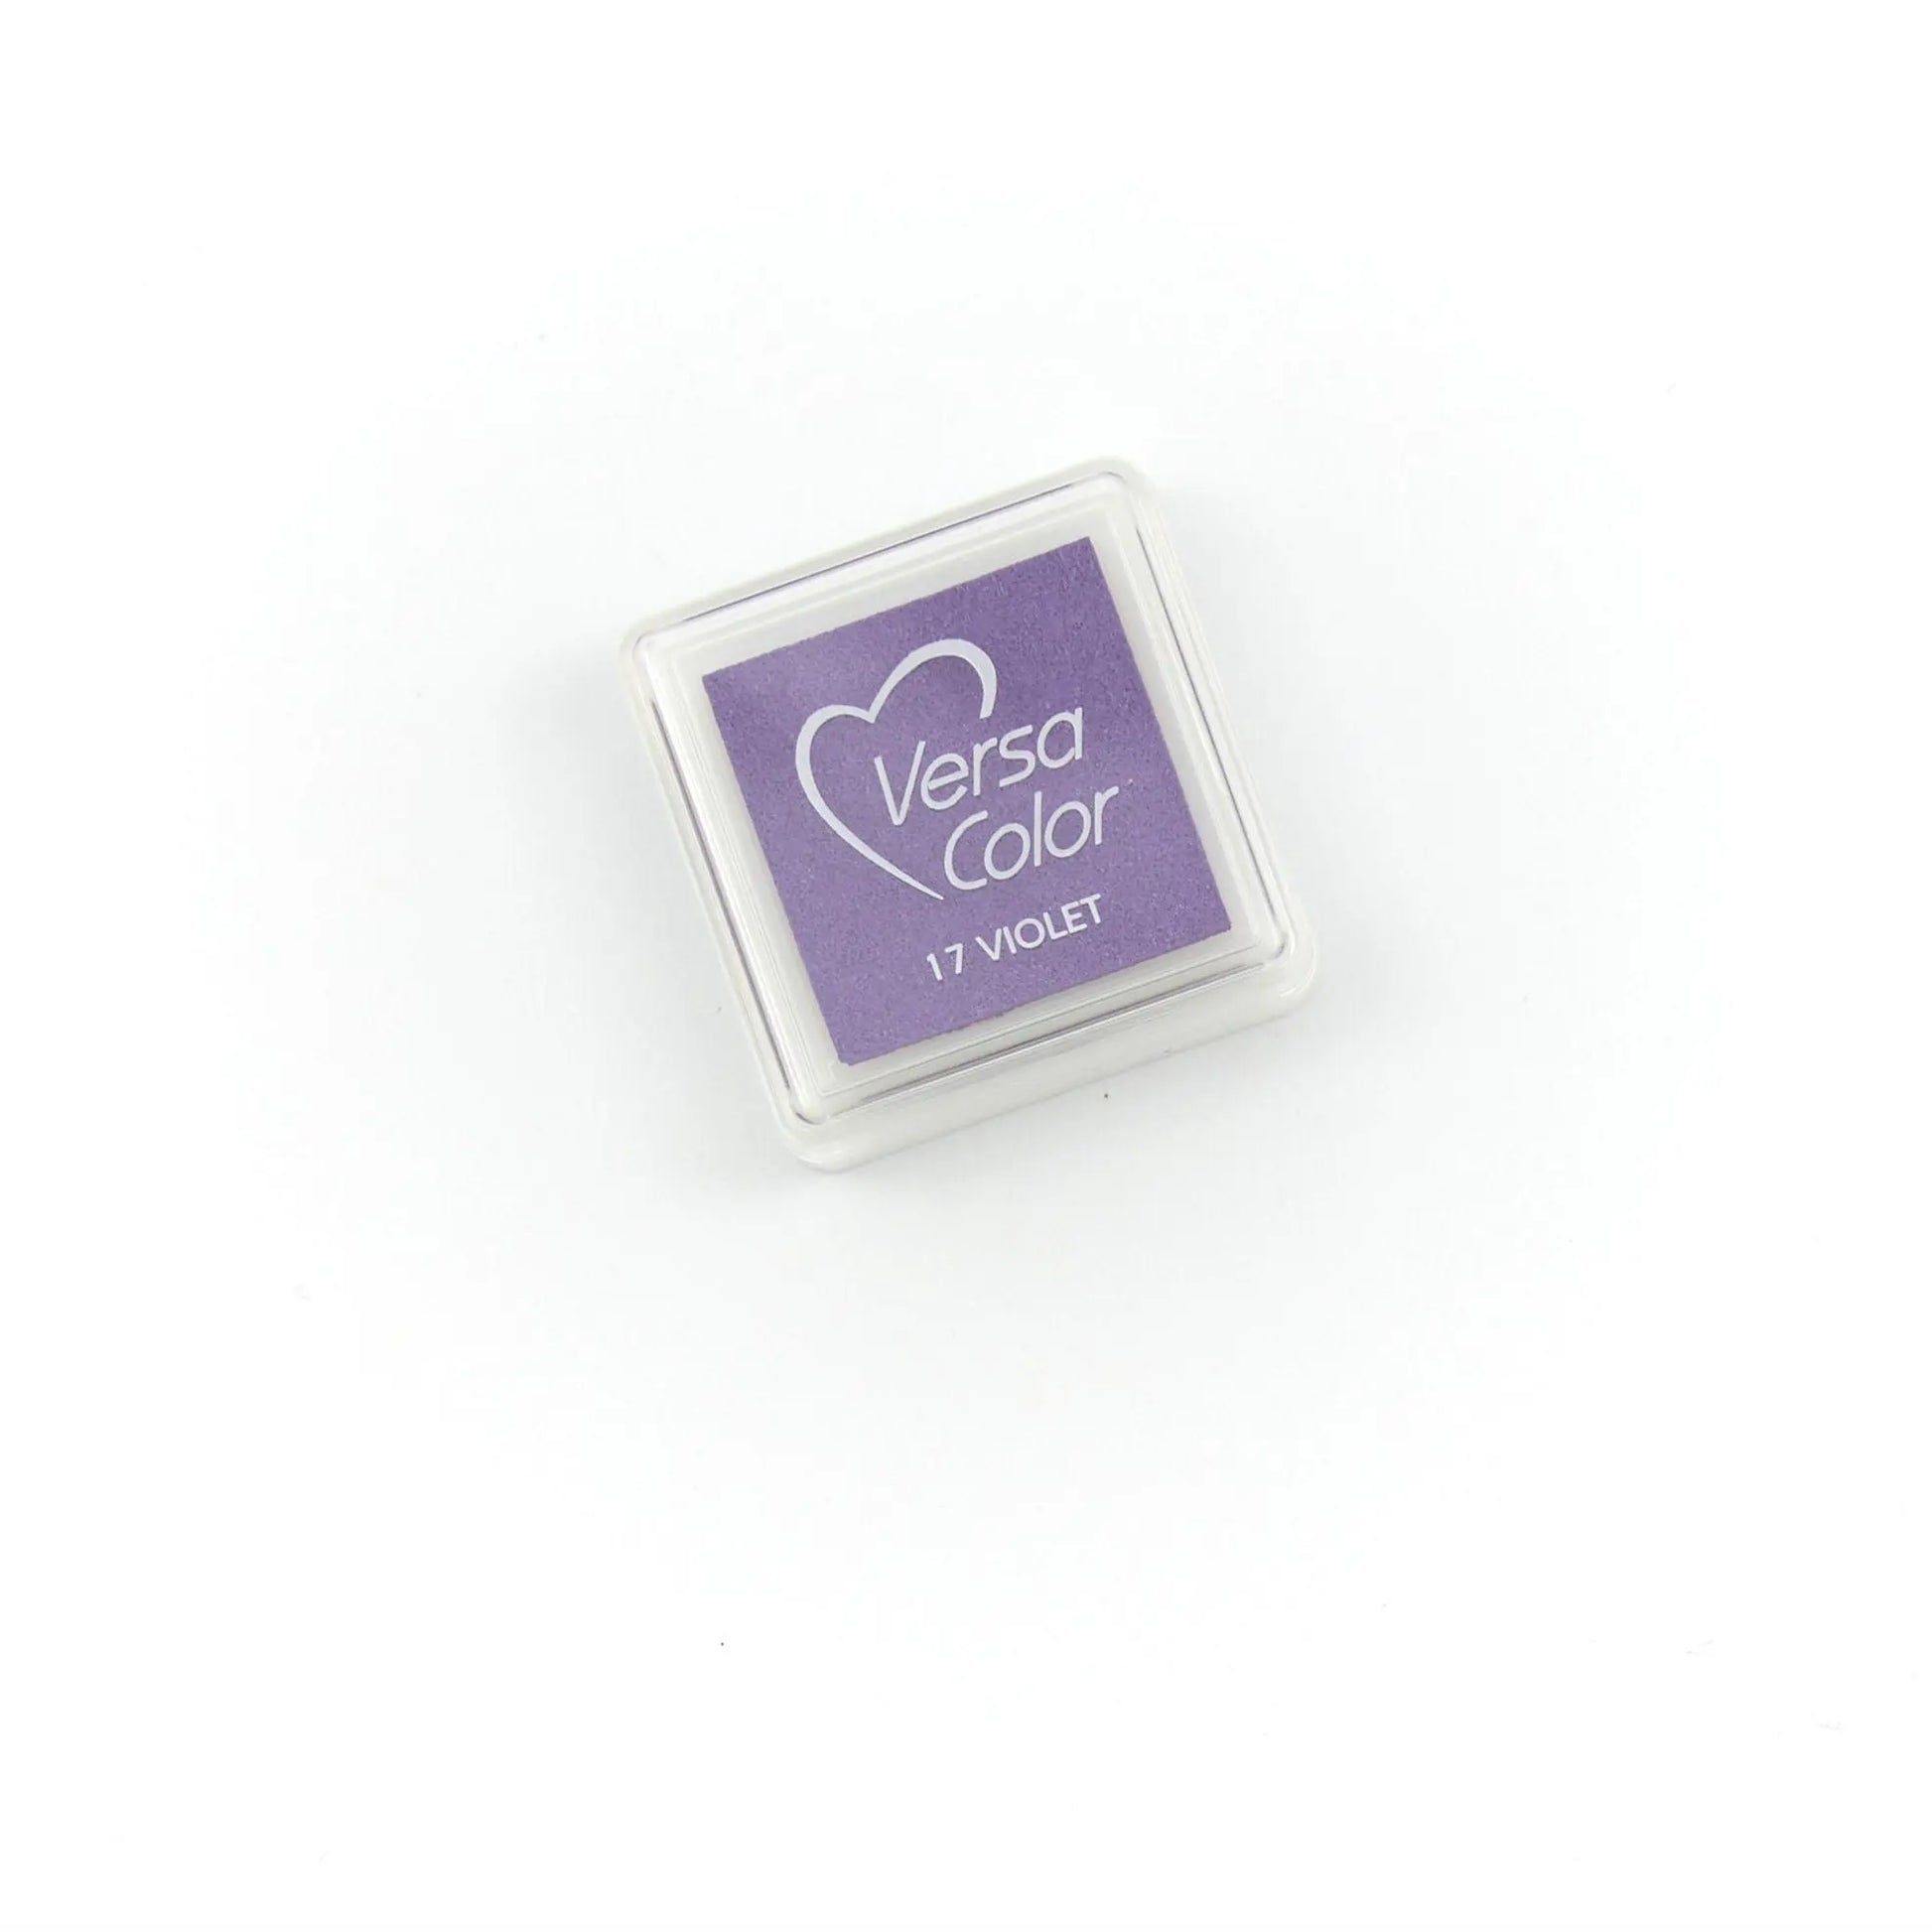 Mini-Stempelkissen lila - Versa Color "violet" - IN LOVE WITH PAPER